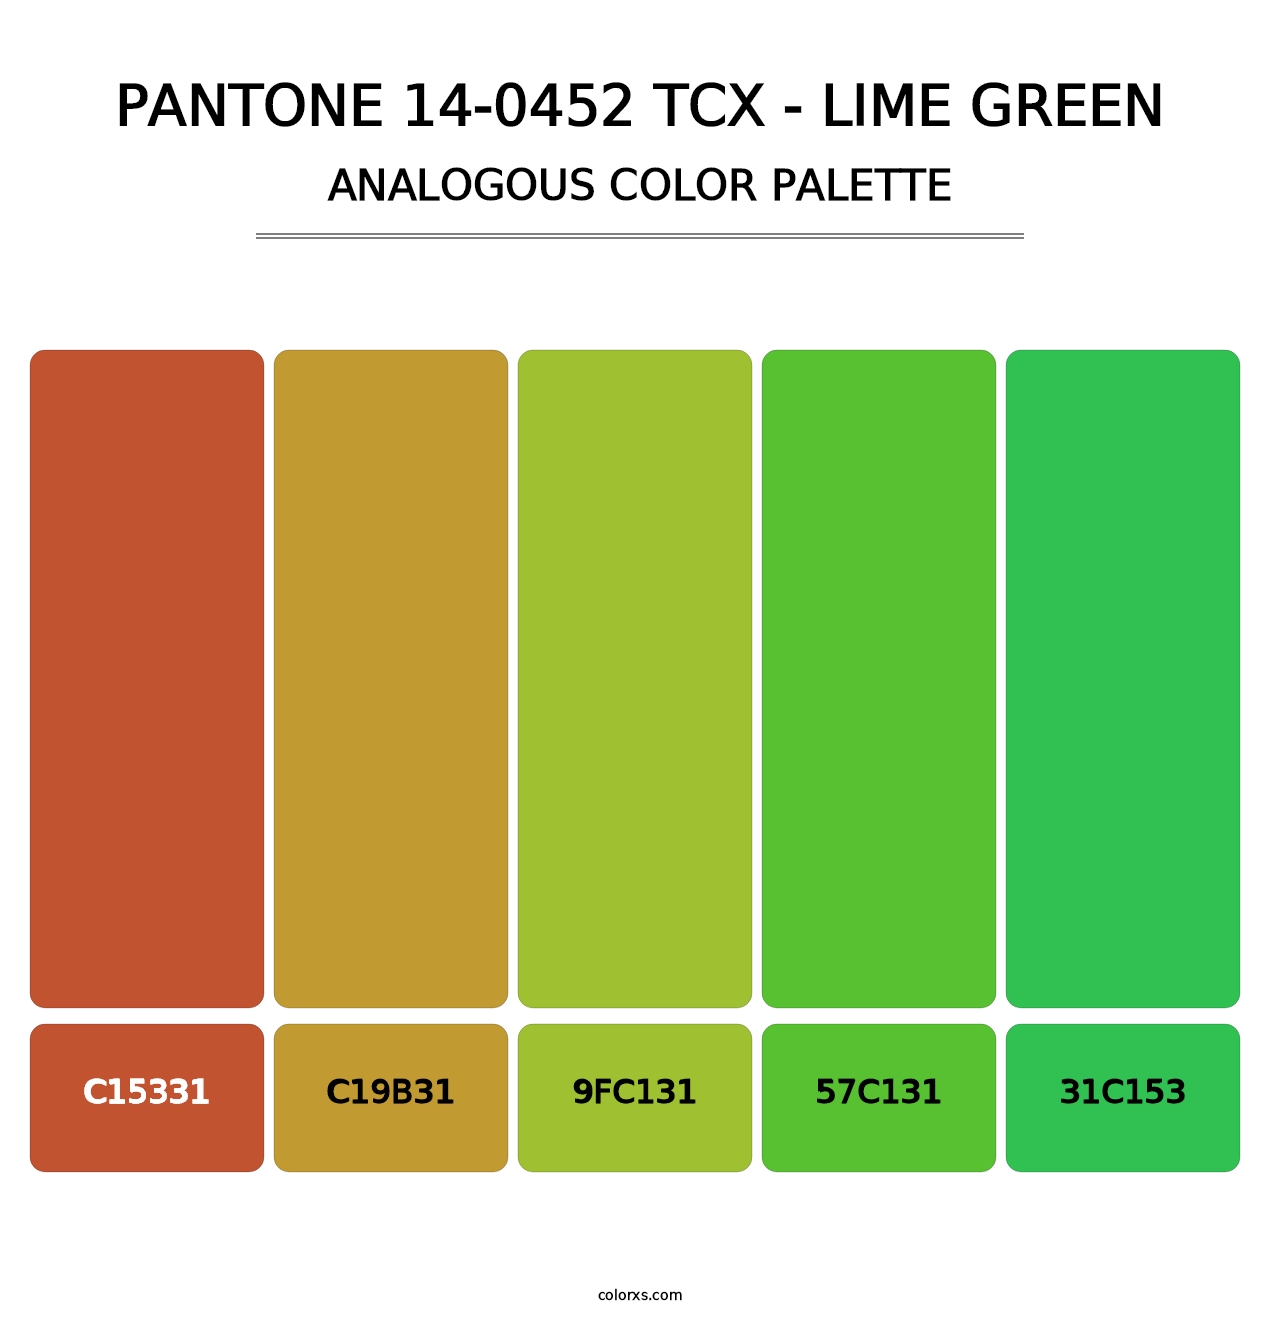 PANTONE 14-0452 TCX - Lime Green - Analogous Color Palette